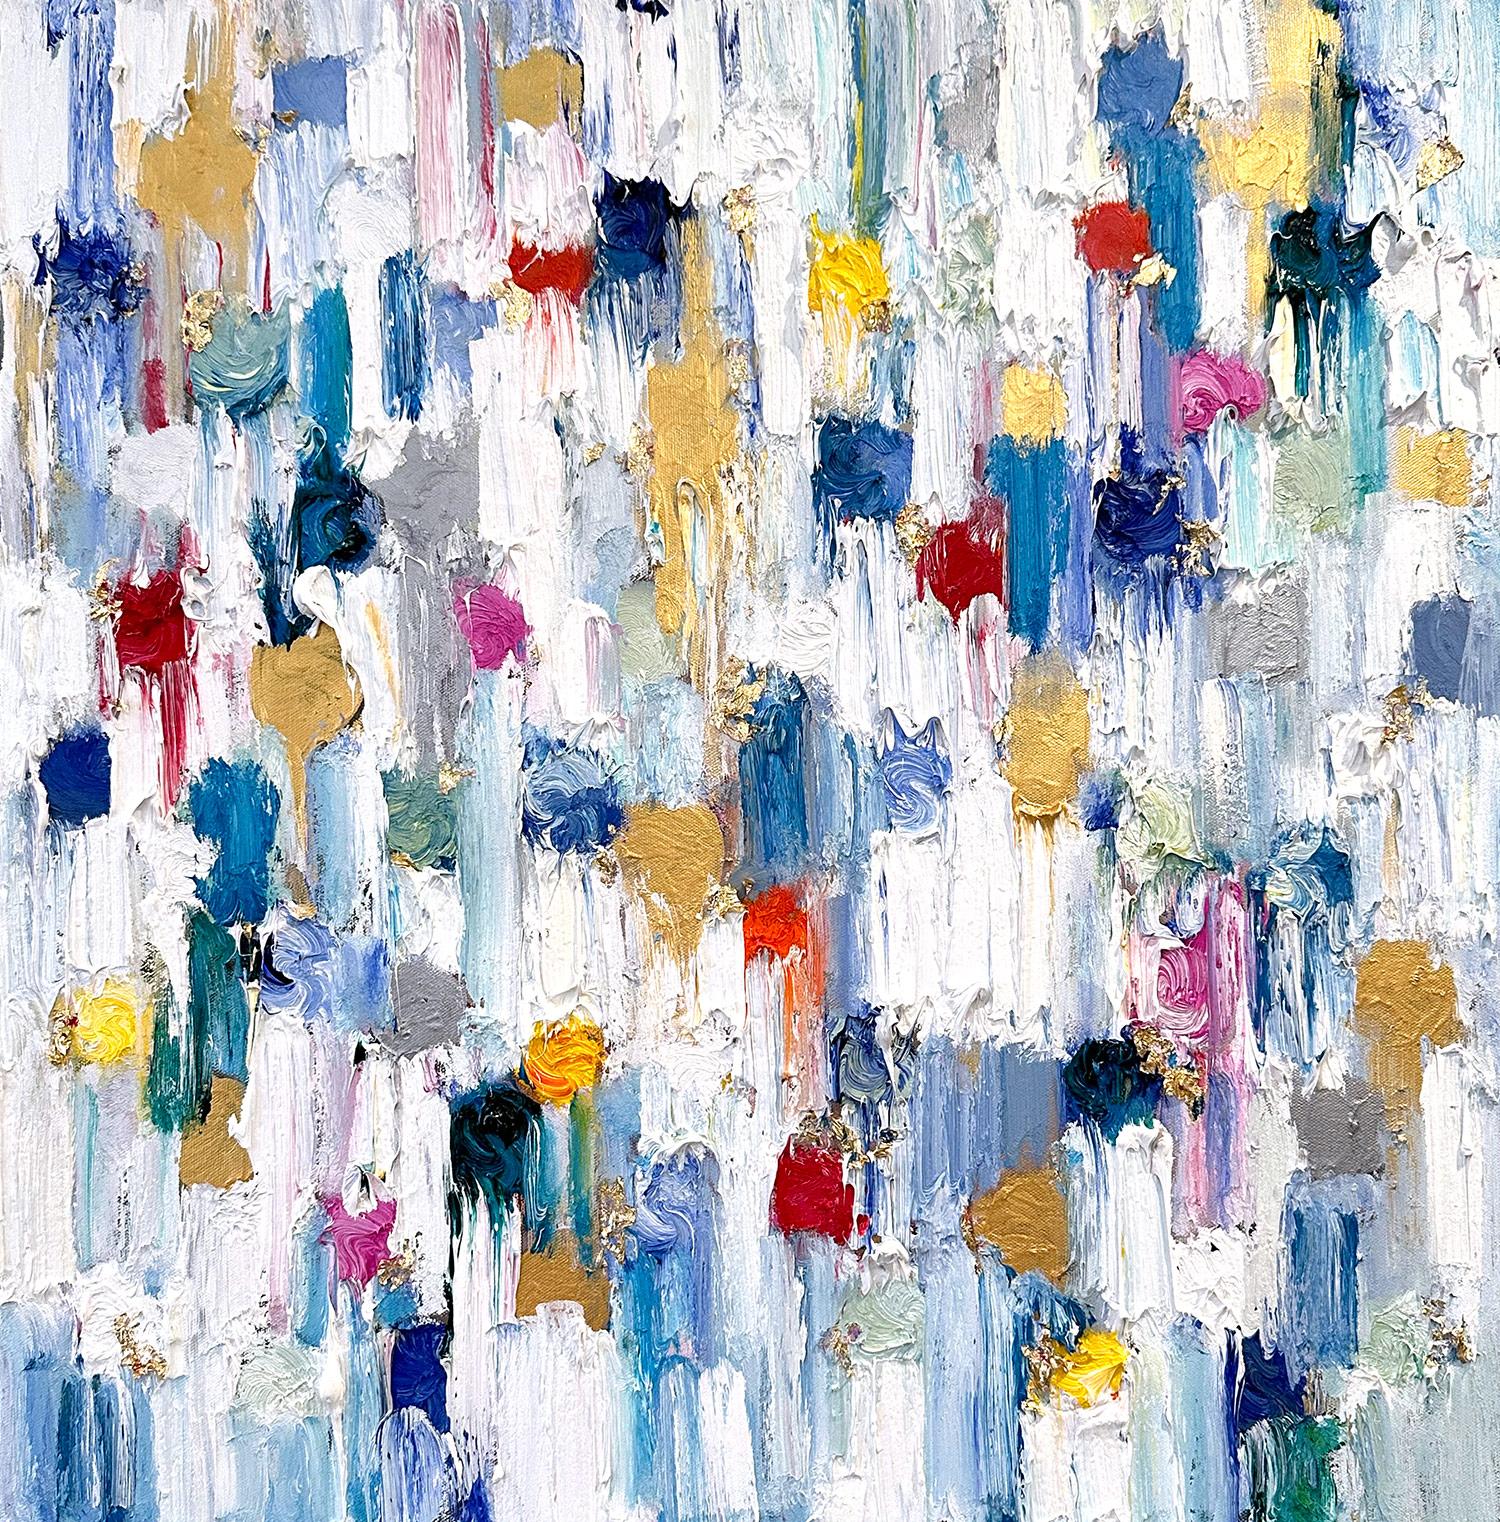 Abstract Painting Cindy Shaoul - "Dripping Dots - Saint Barts" Peinture à l'huile contemporaine multicolore sur toile